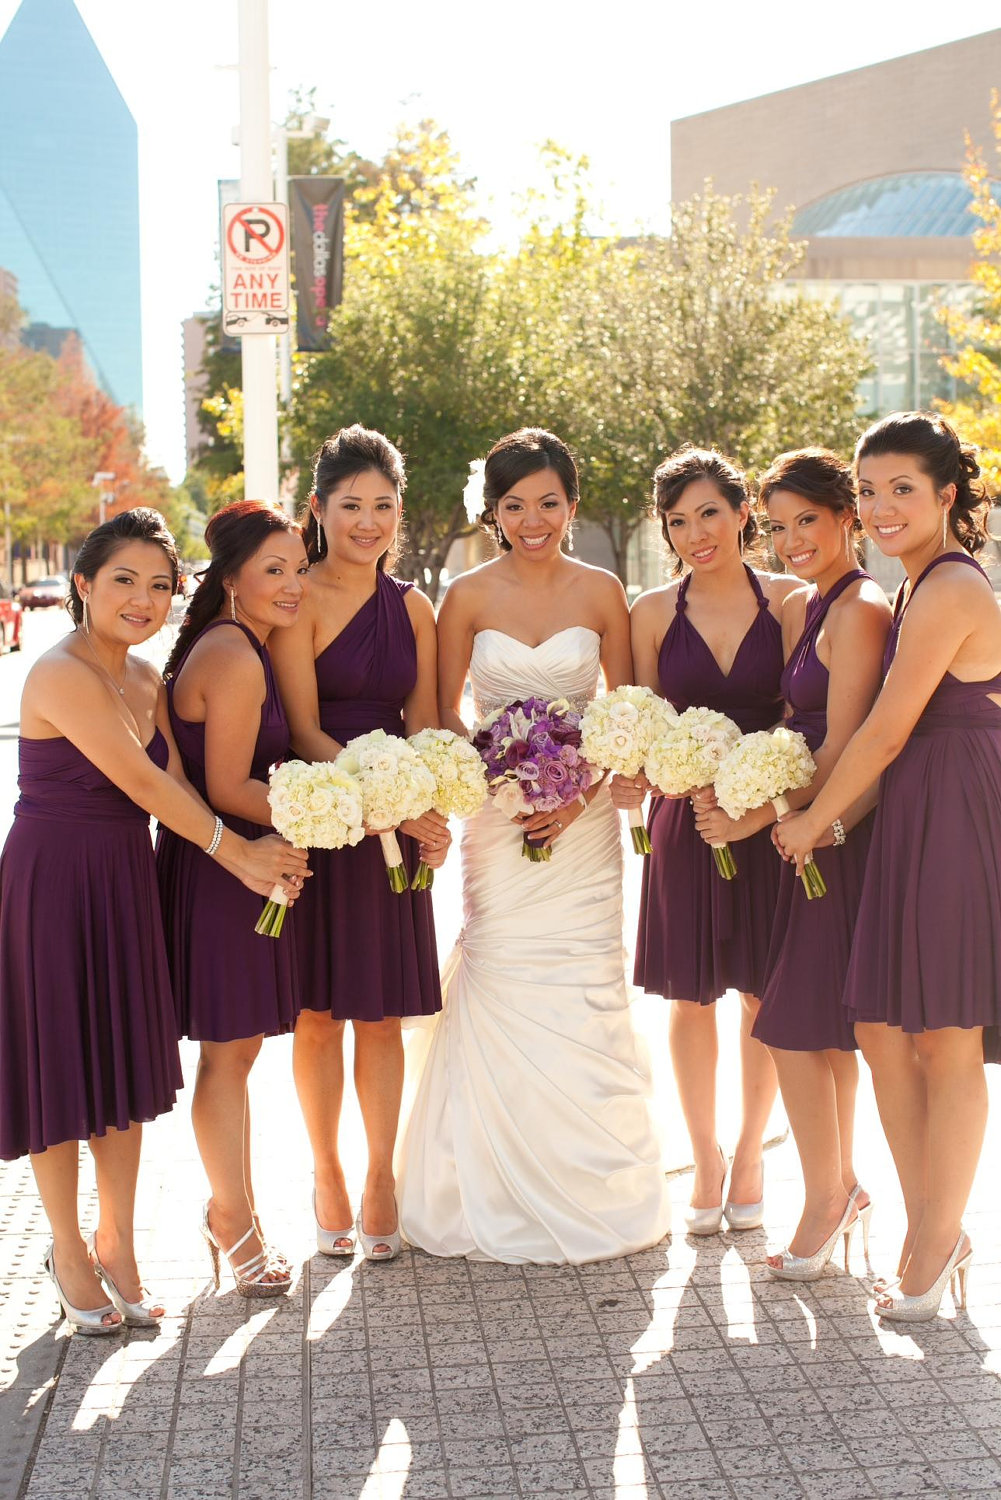 purple bridesmaid convertible dress | via https://emmalinebride.com/bridesmaids/bridesmaid-dress-worn-different-ways/